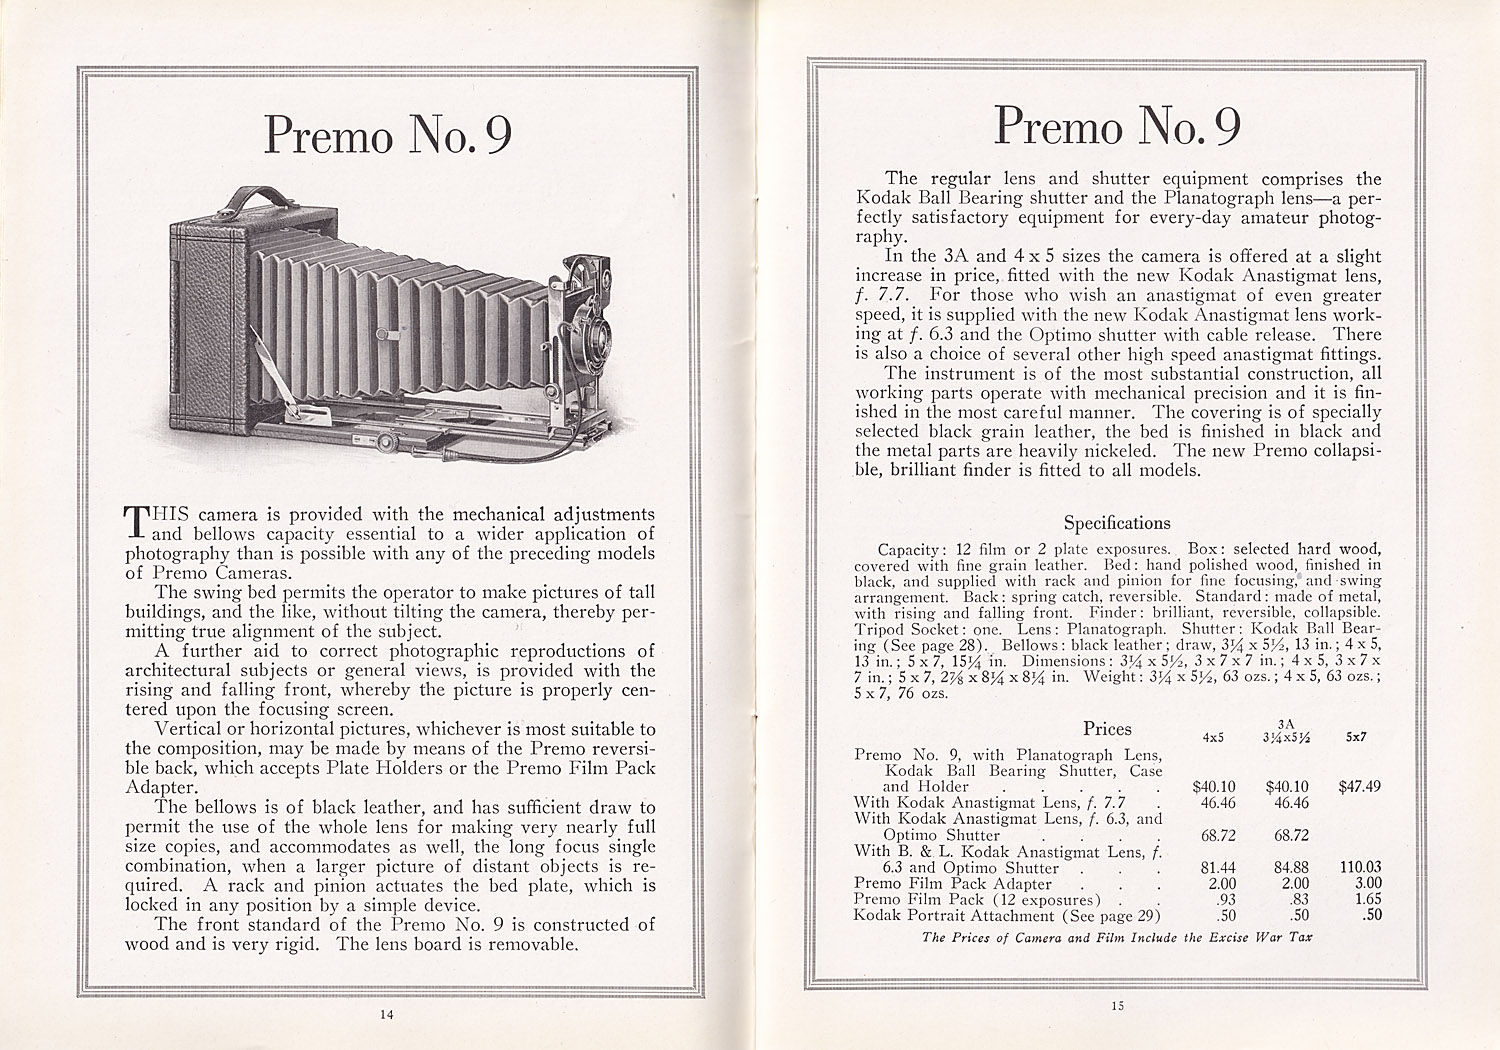 1121.premos.1919-14-15-1500.jpg